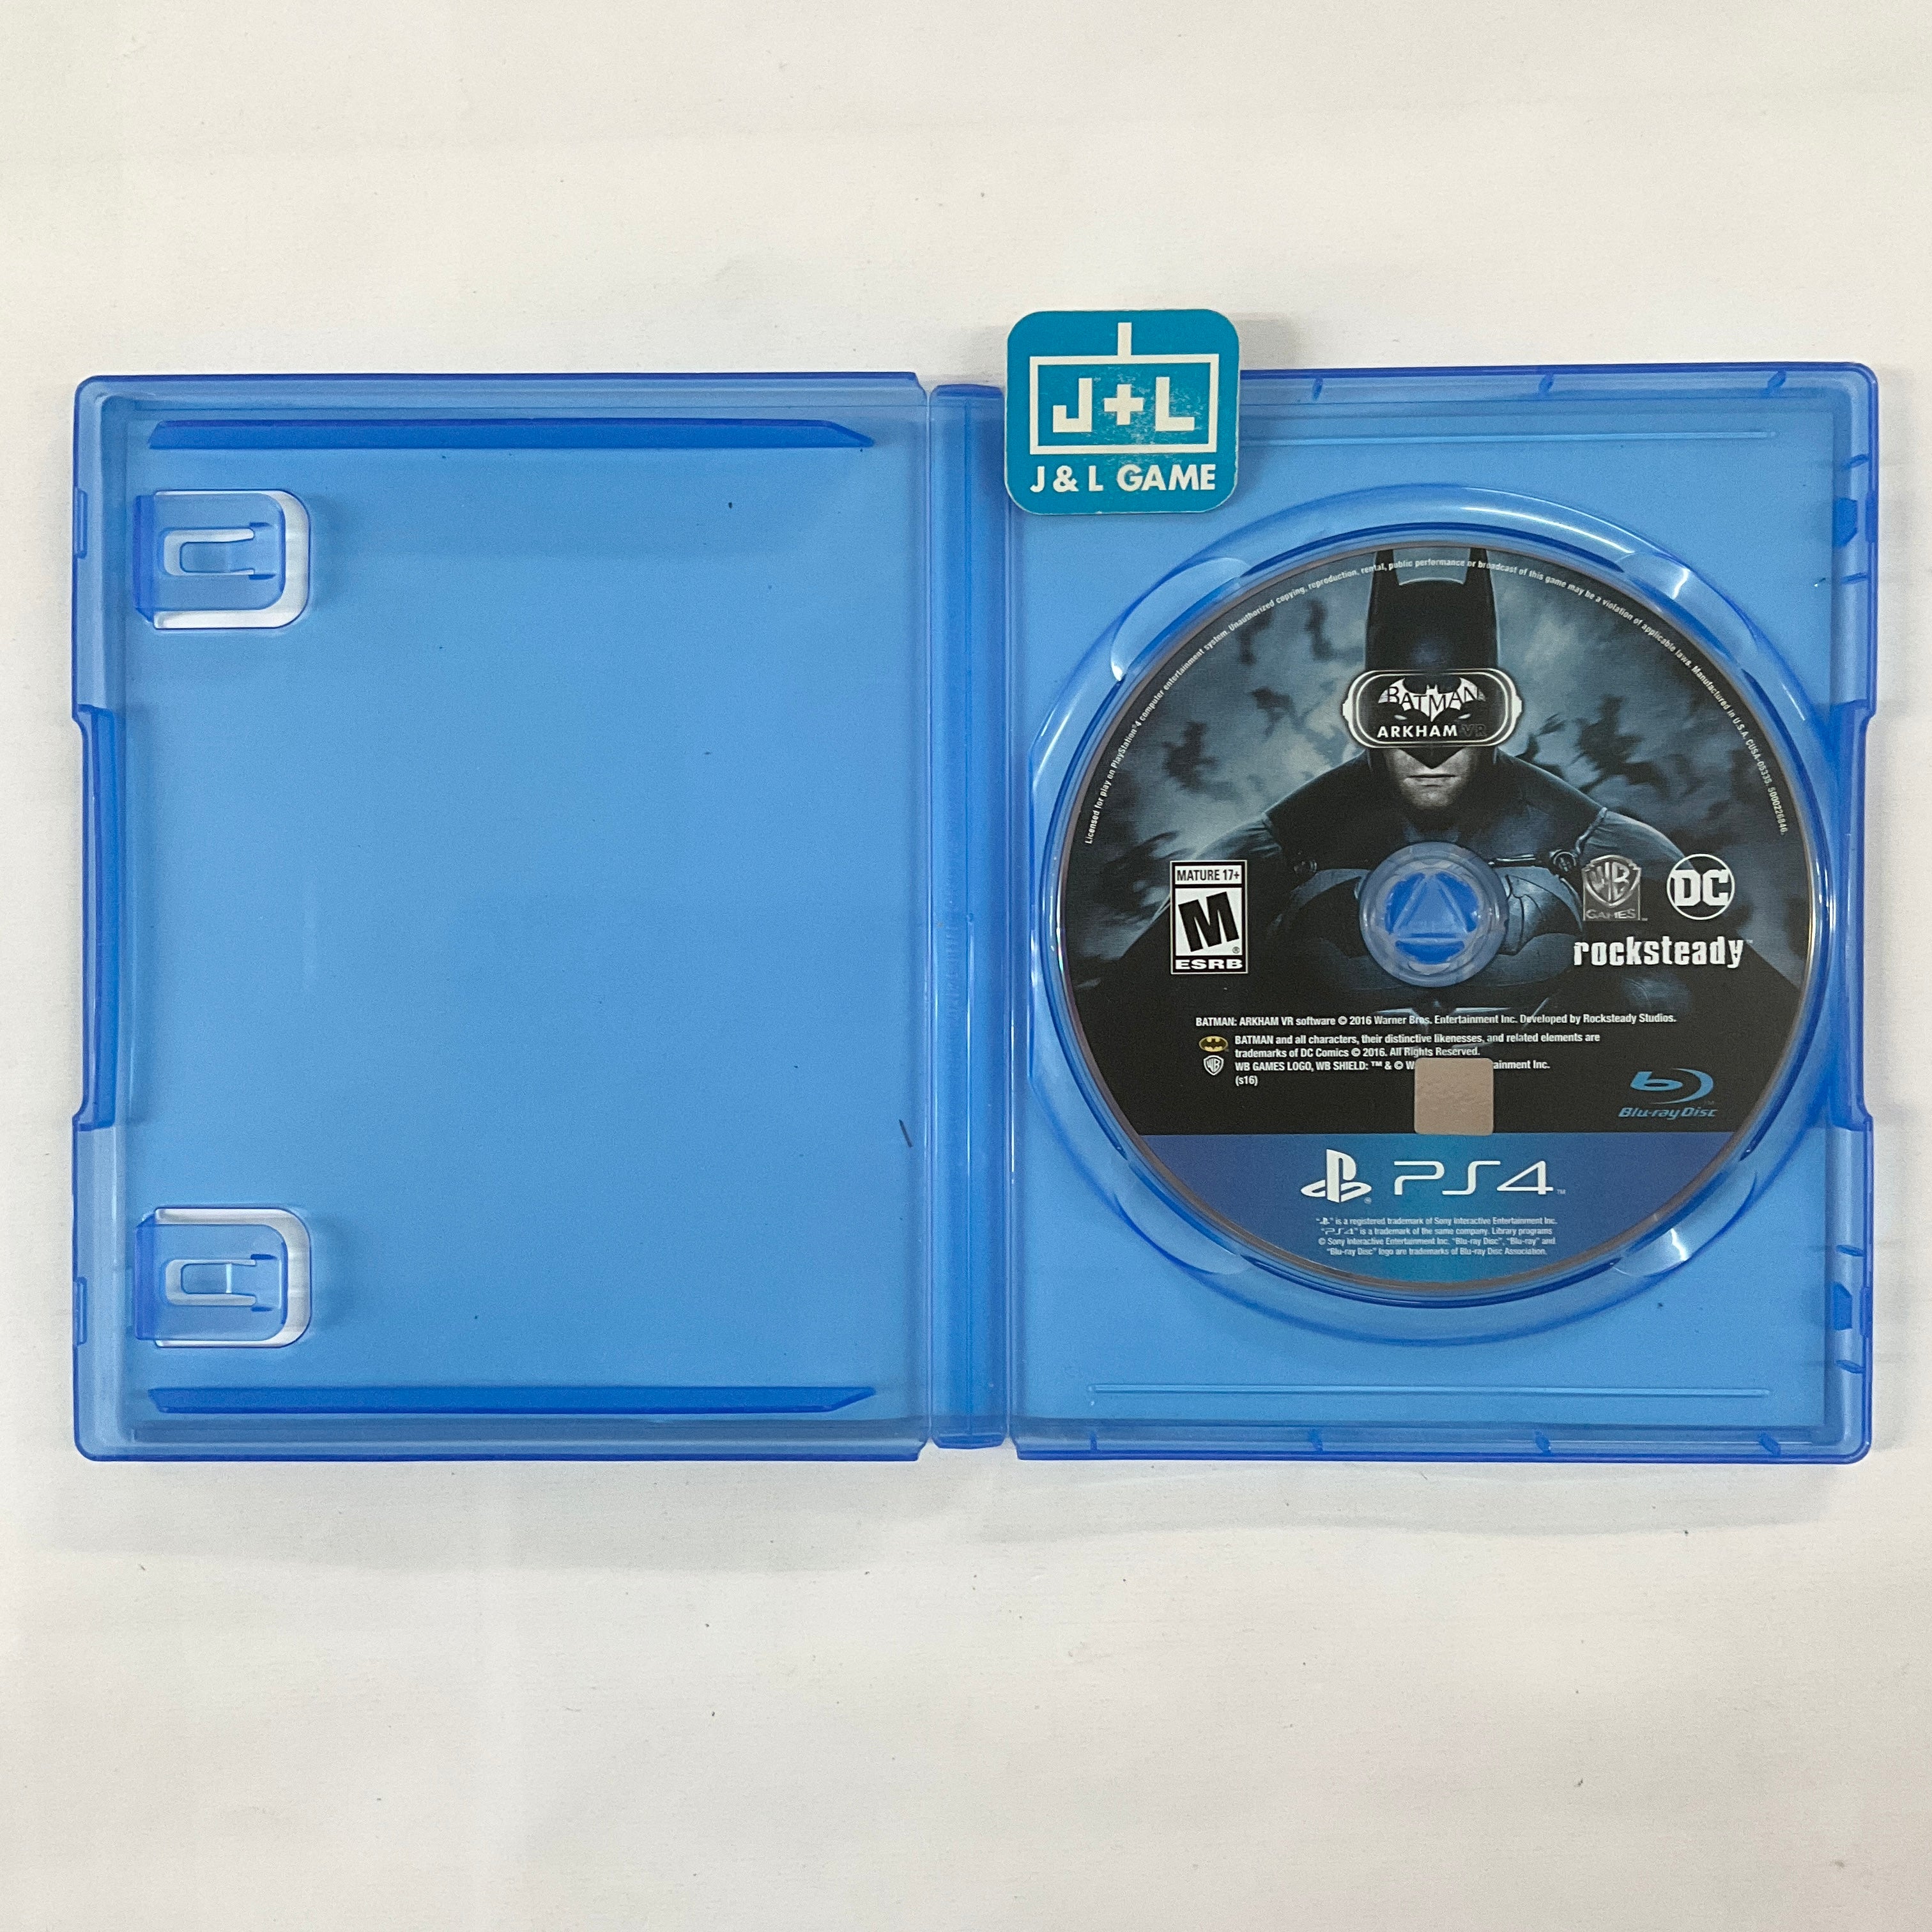 Batman: Arkham VR (PlayStation VR)- (PS4) PlayStation 4 [Pre-Owned] Video Games Warner Bros. Interactive Entertainment   